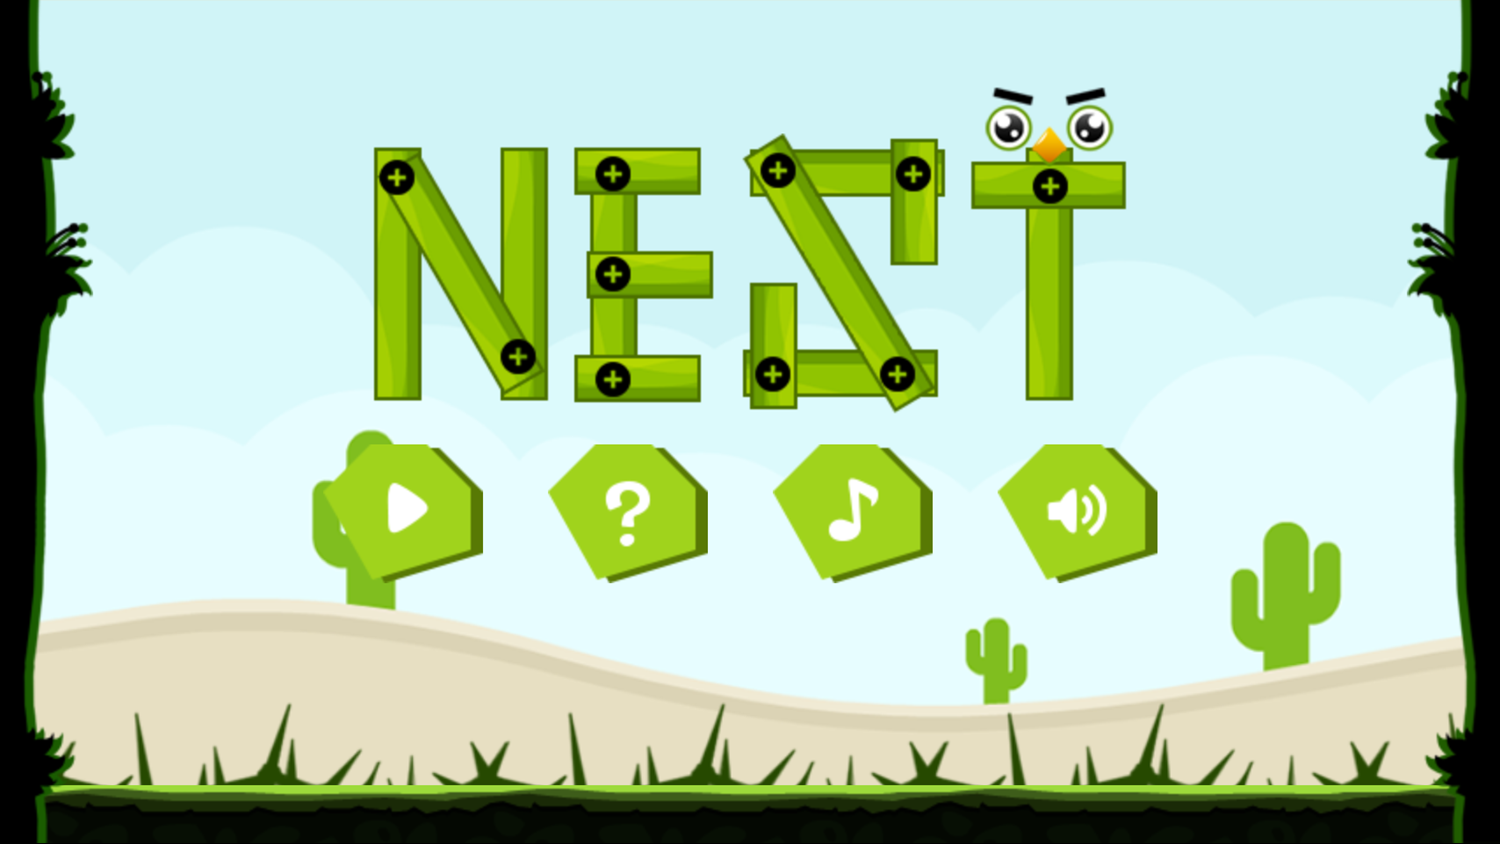 Nest Game Welcome Screen Screenshot.